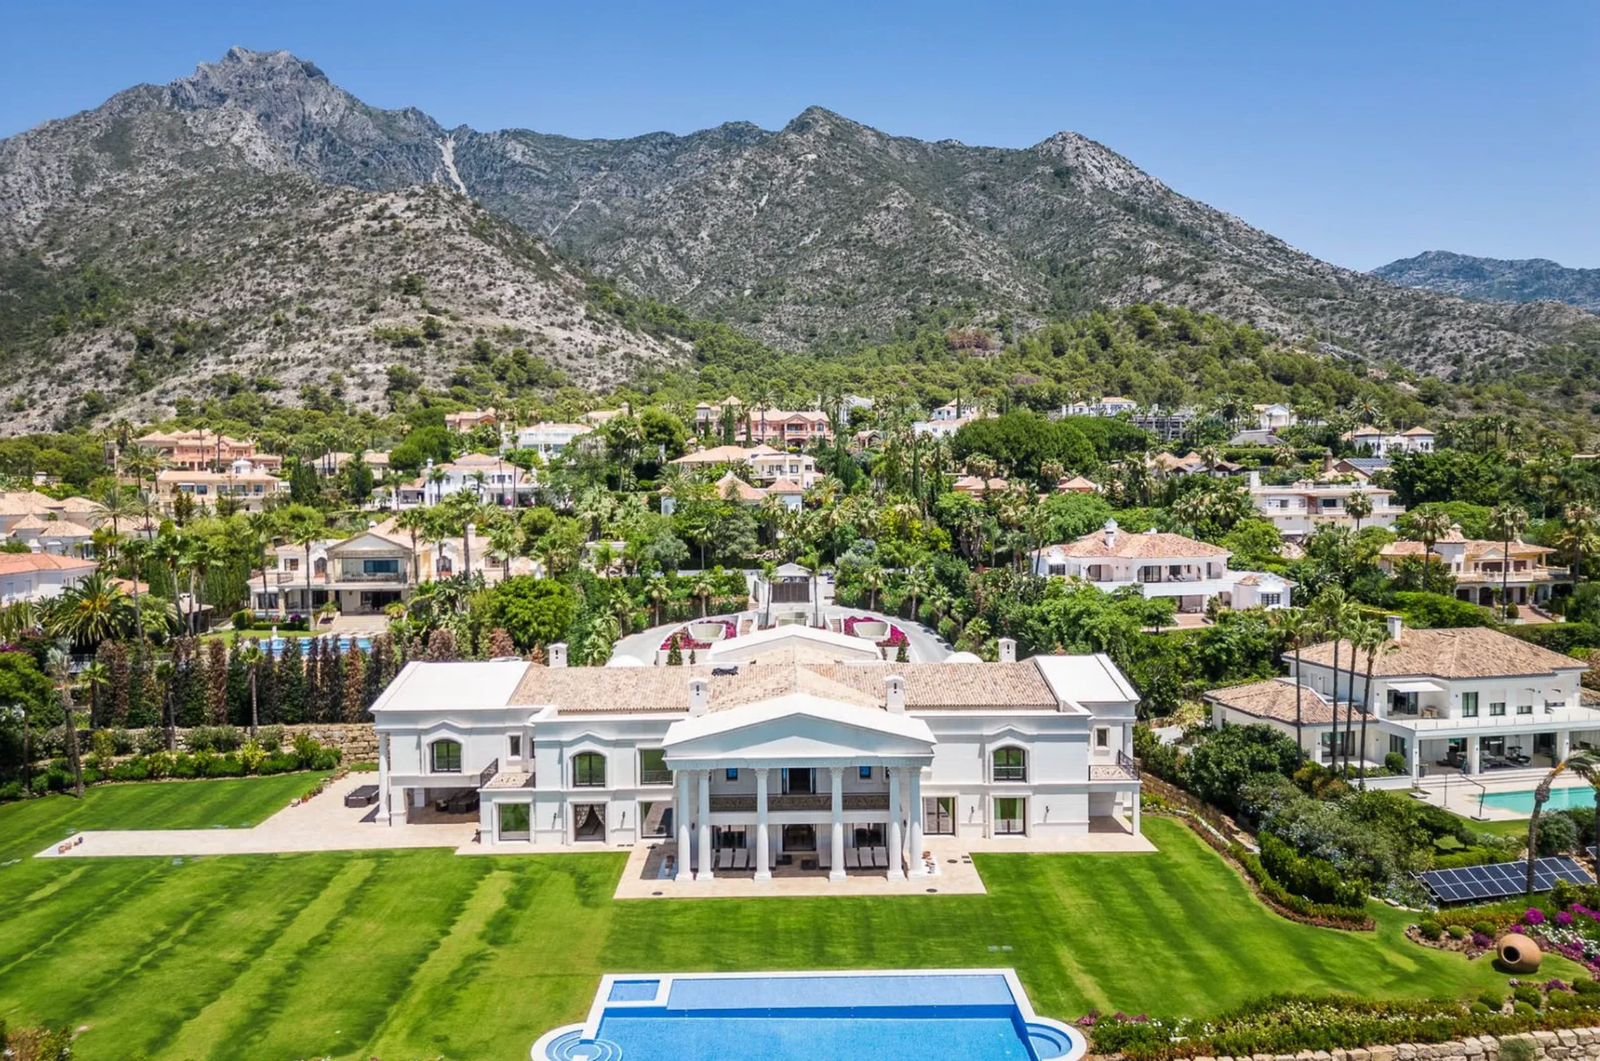 Sea view mansion in Marbella, Sierra Blanca, Costa del Sol, Spain luxury real estate